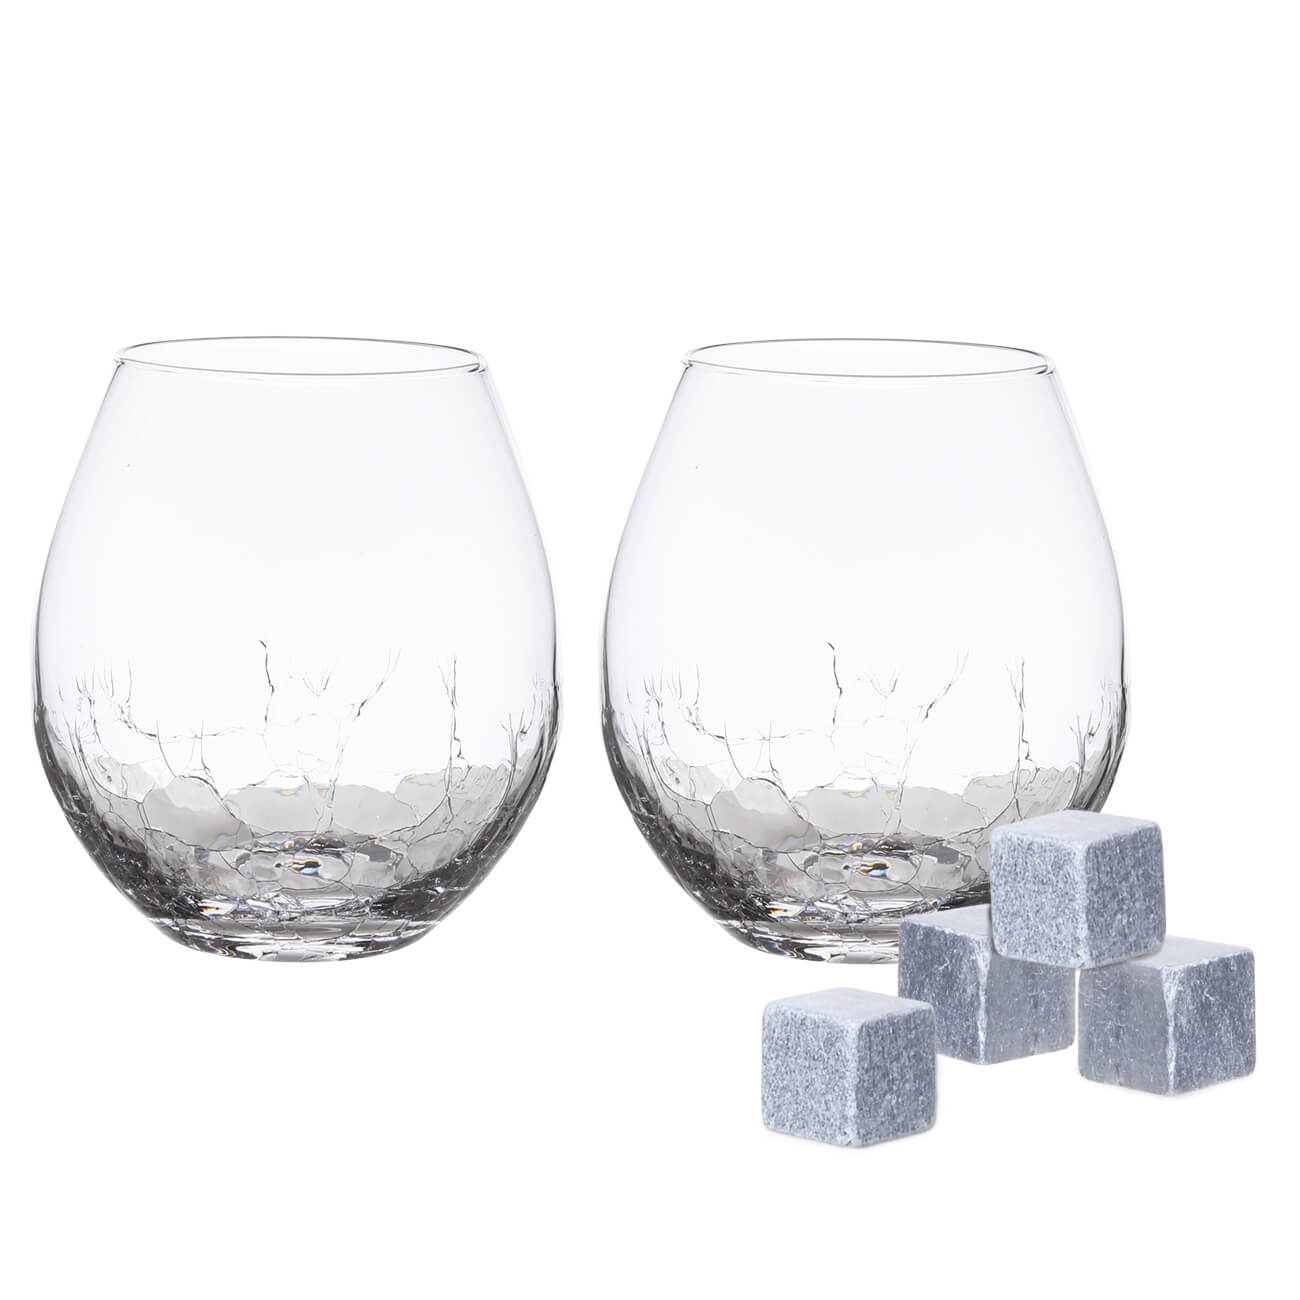 Набор для виски, 2 перс, 6 пр, стаканы/кубики, стекло/стеатит, Кракелюр, Ice кубики